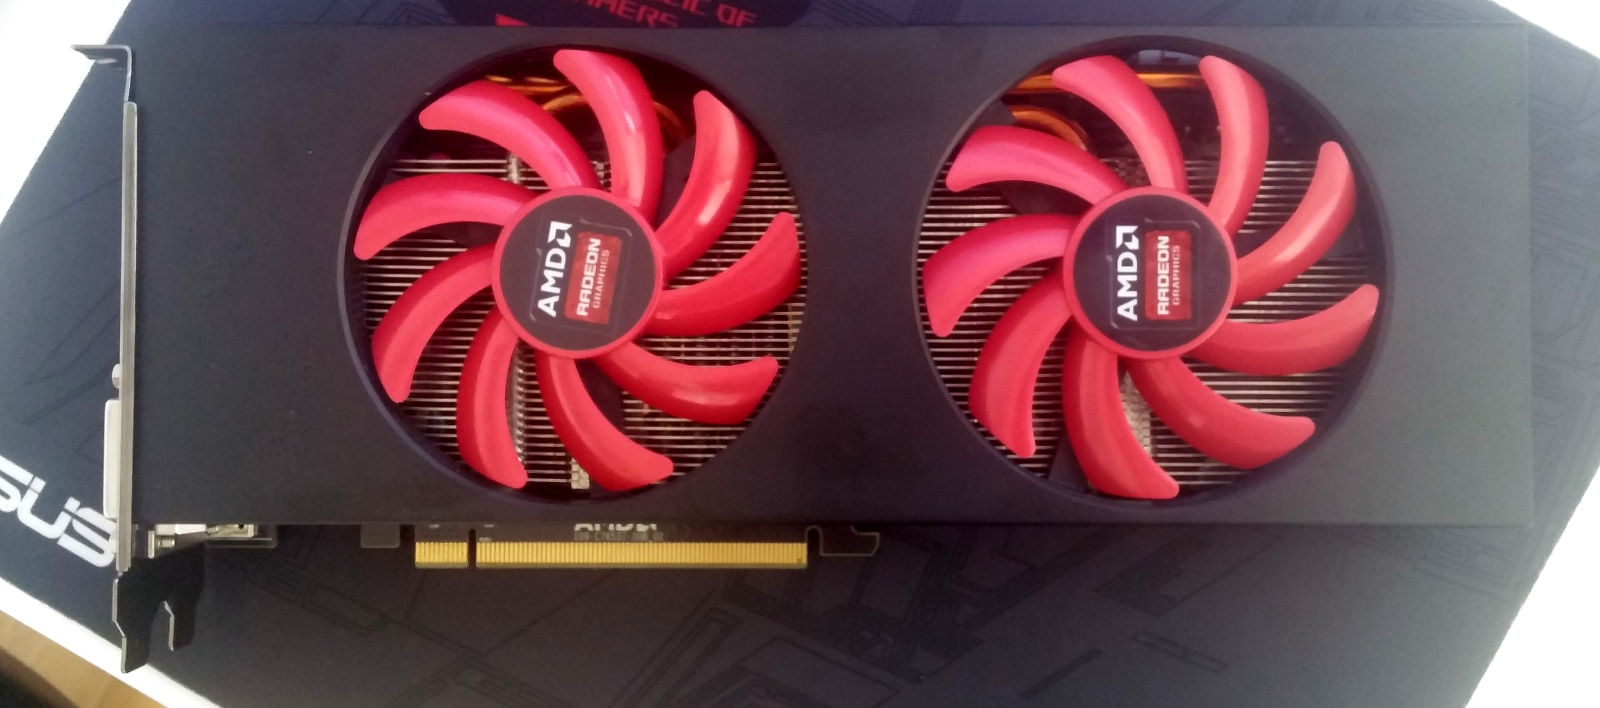 AMD-Radeon-R9-285X-front.jpeg